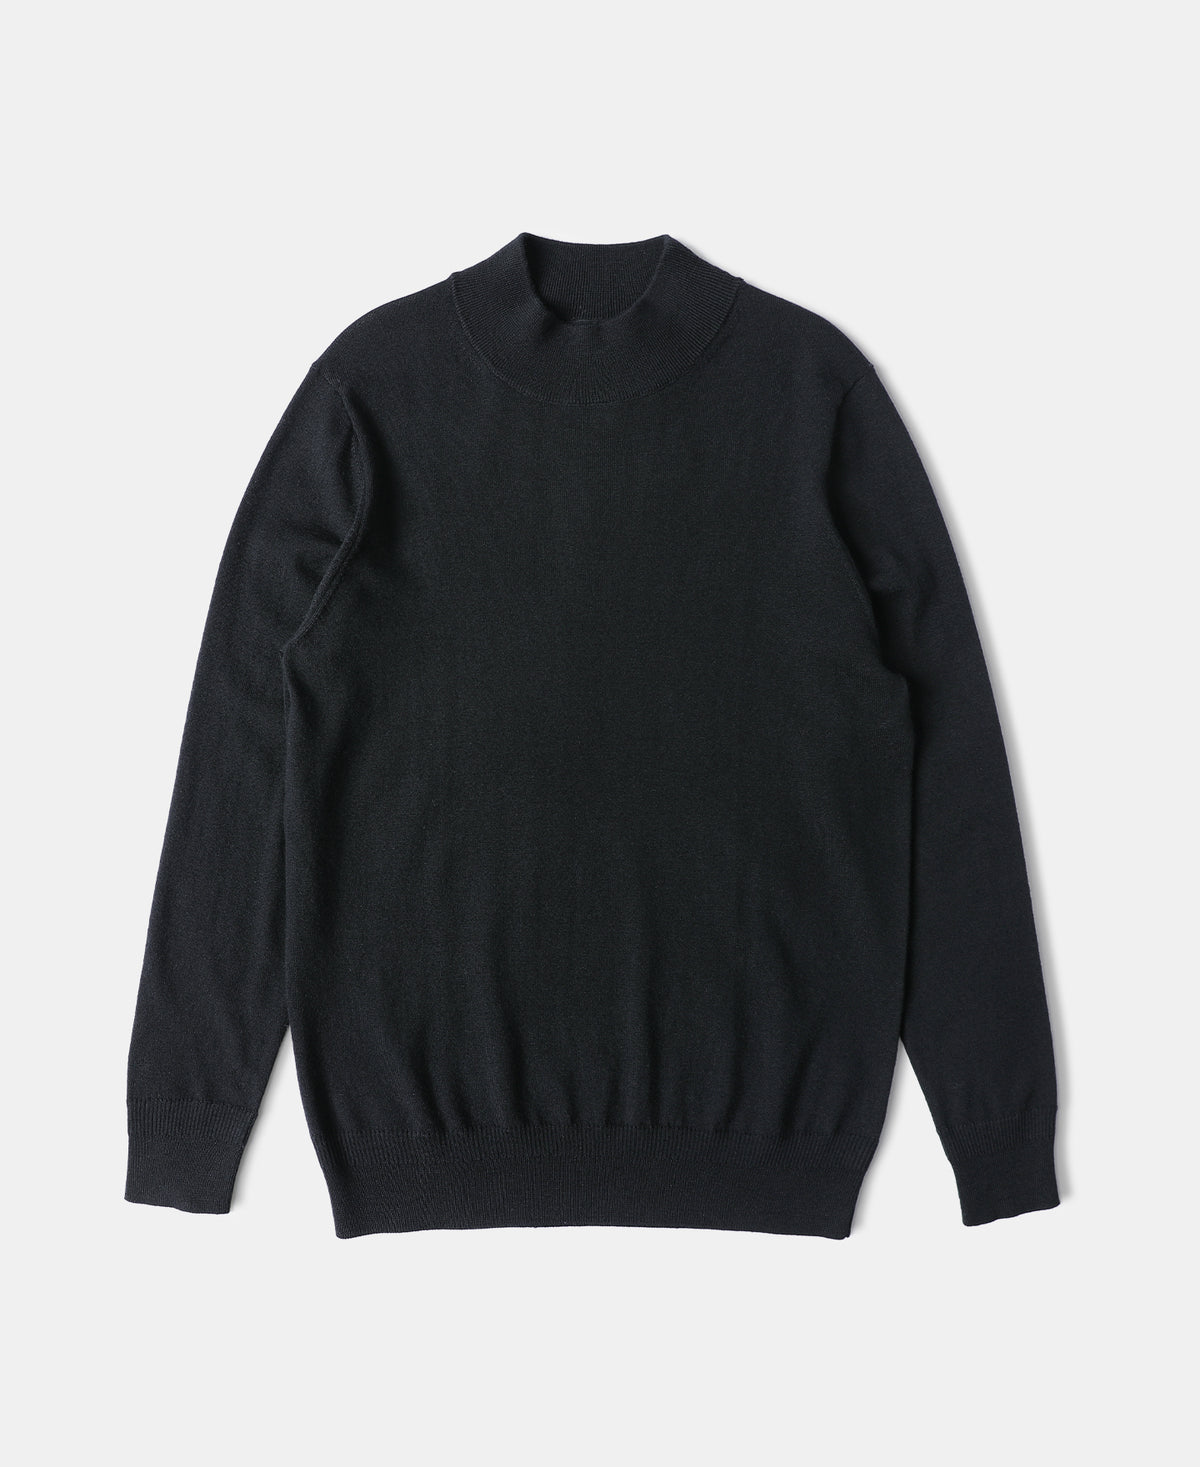 Extrafine Merino Wool Turtleneck Sweater - Black